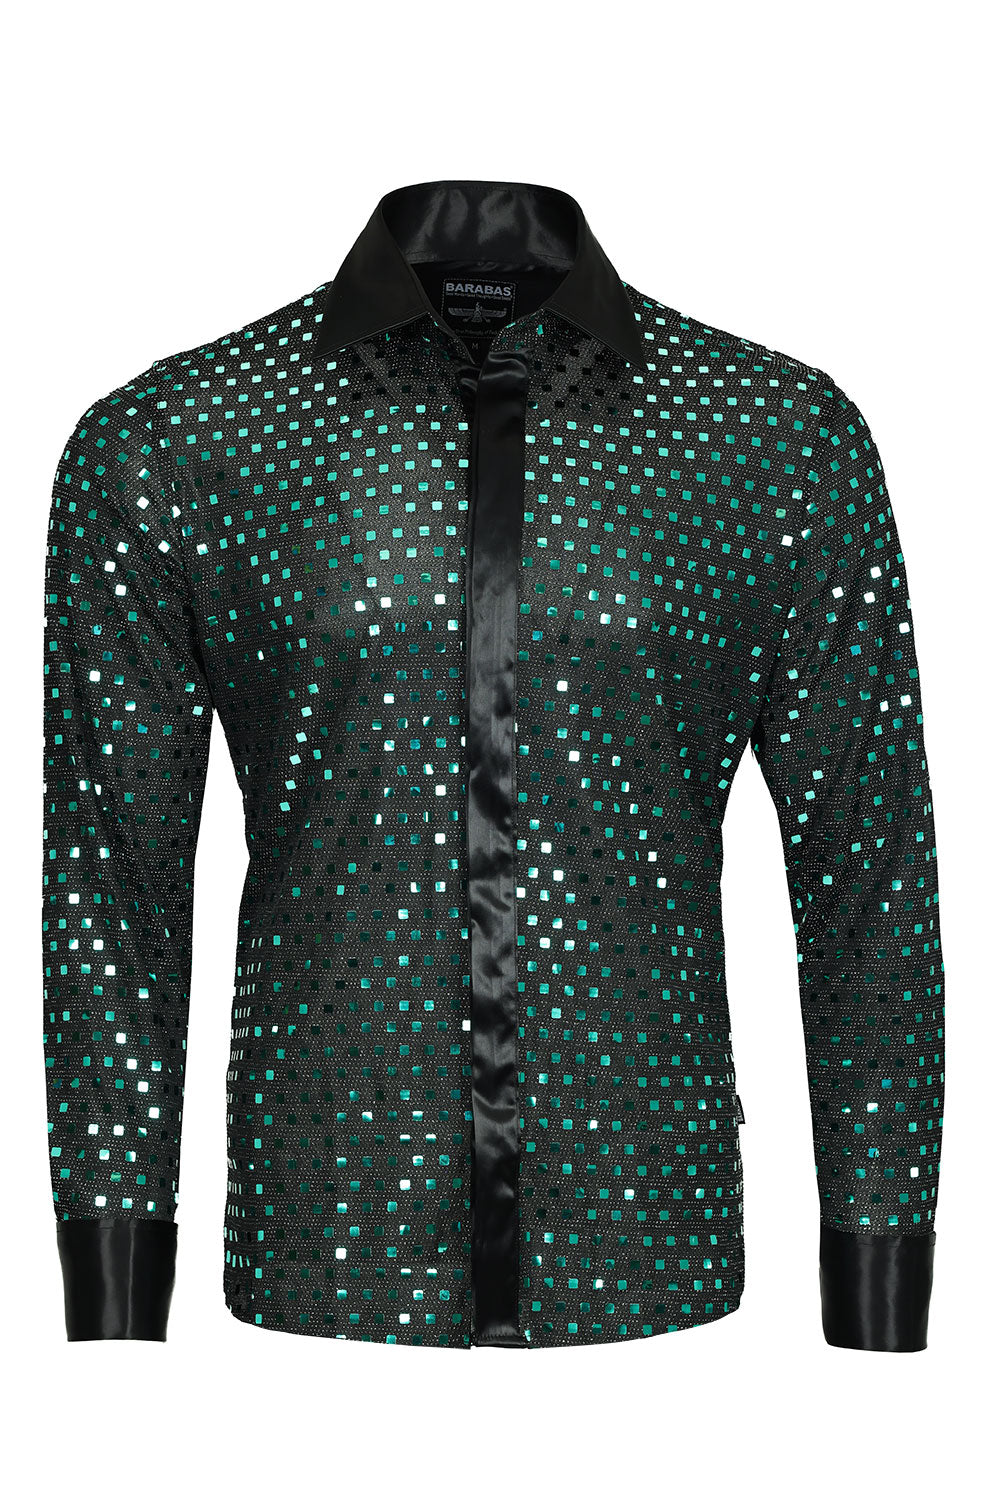 Barabas Men's French Cuff Glittery Sparkly Striped Shirt 2FCS1007 Emerald